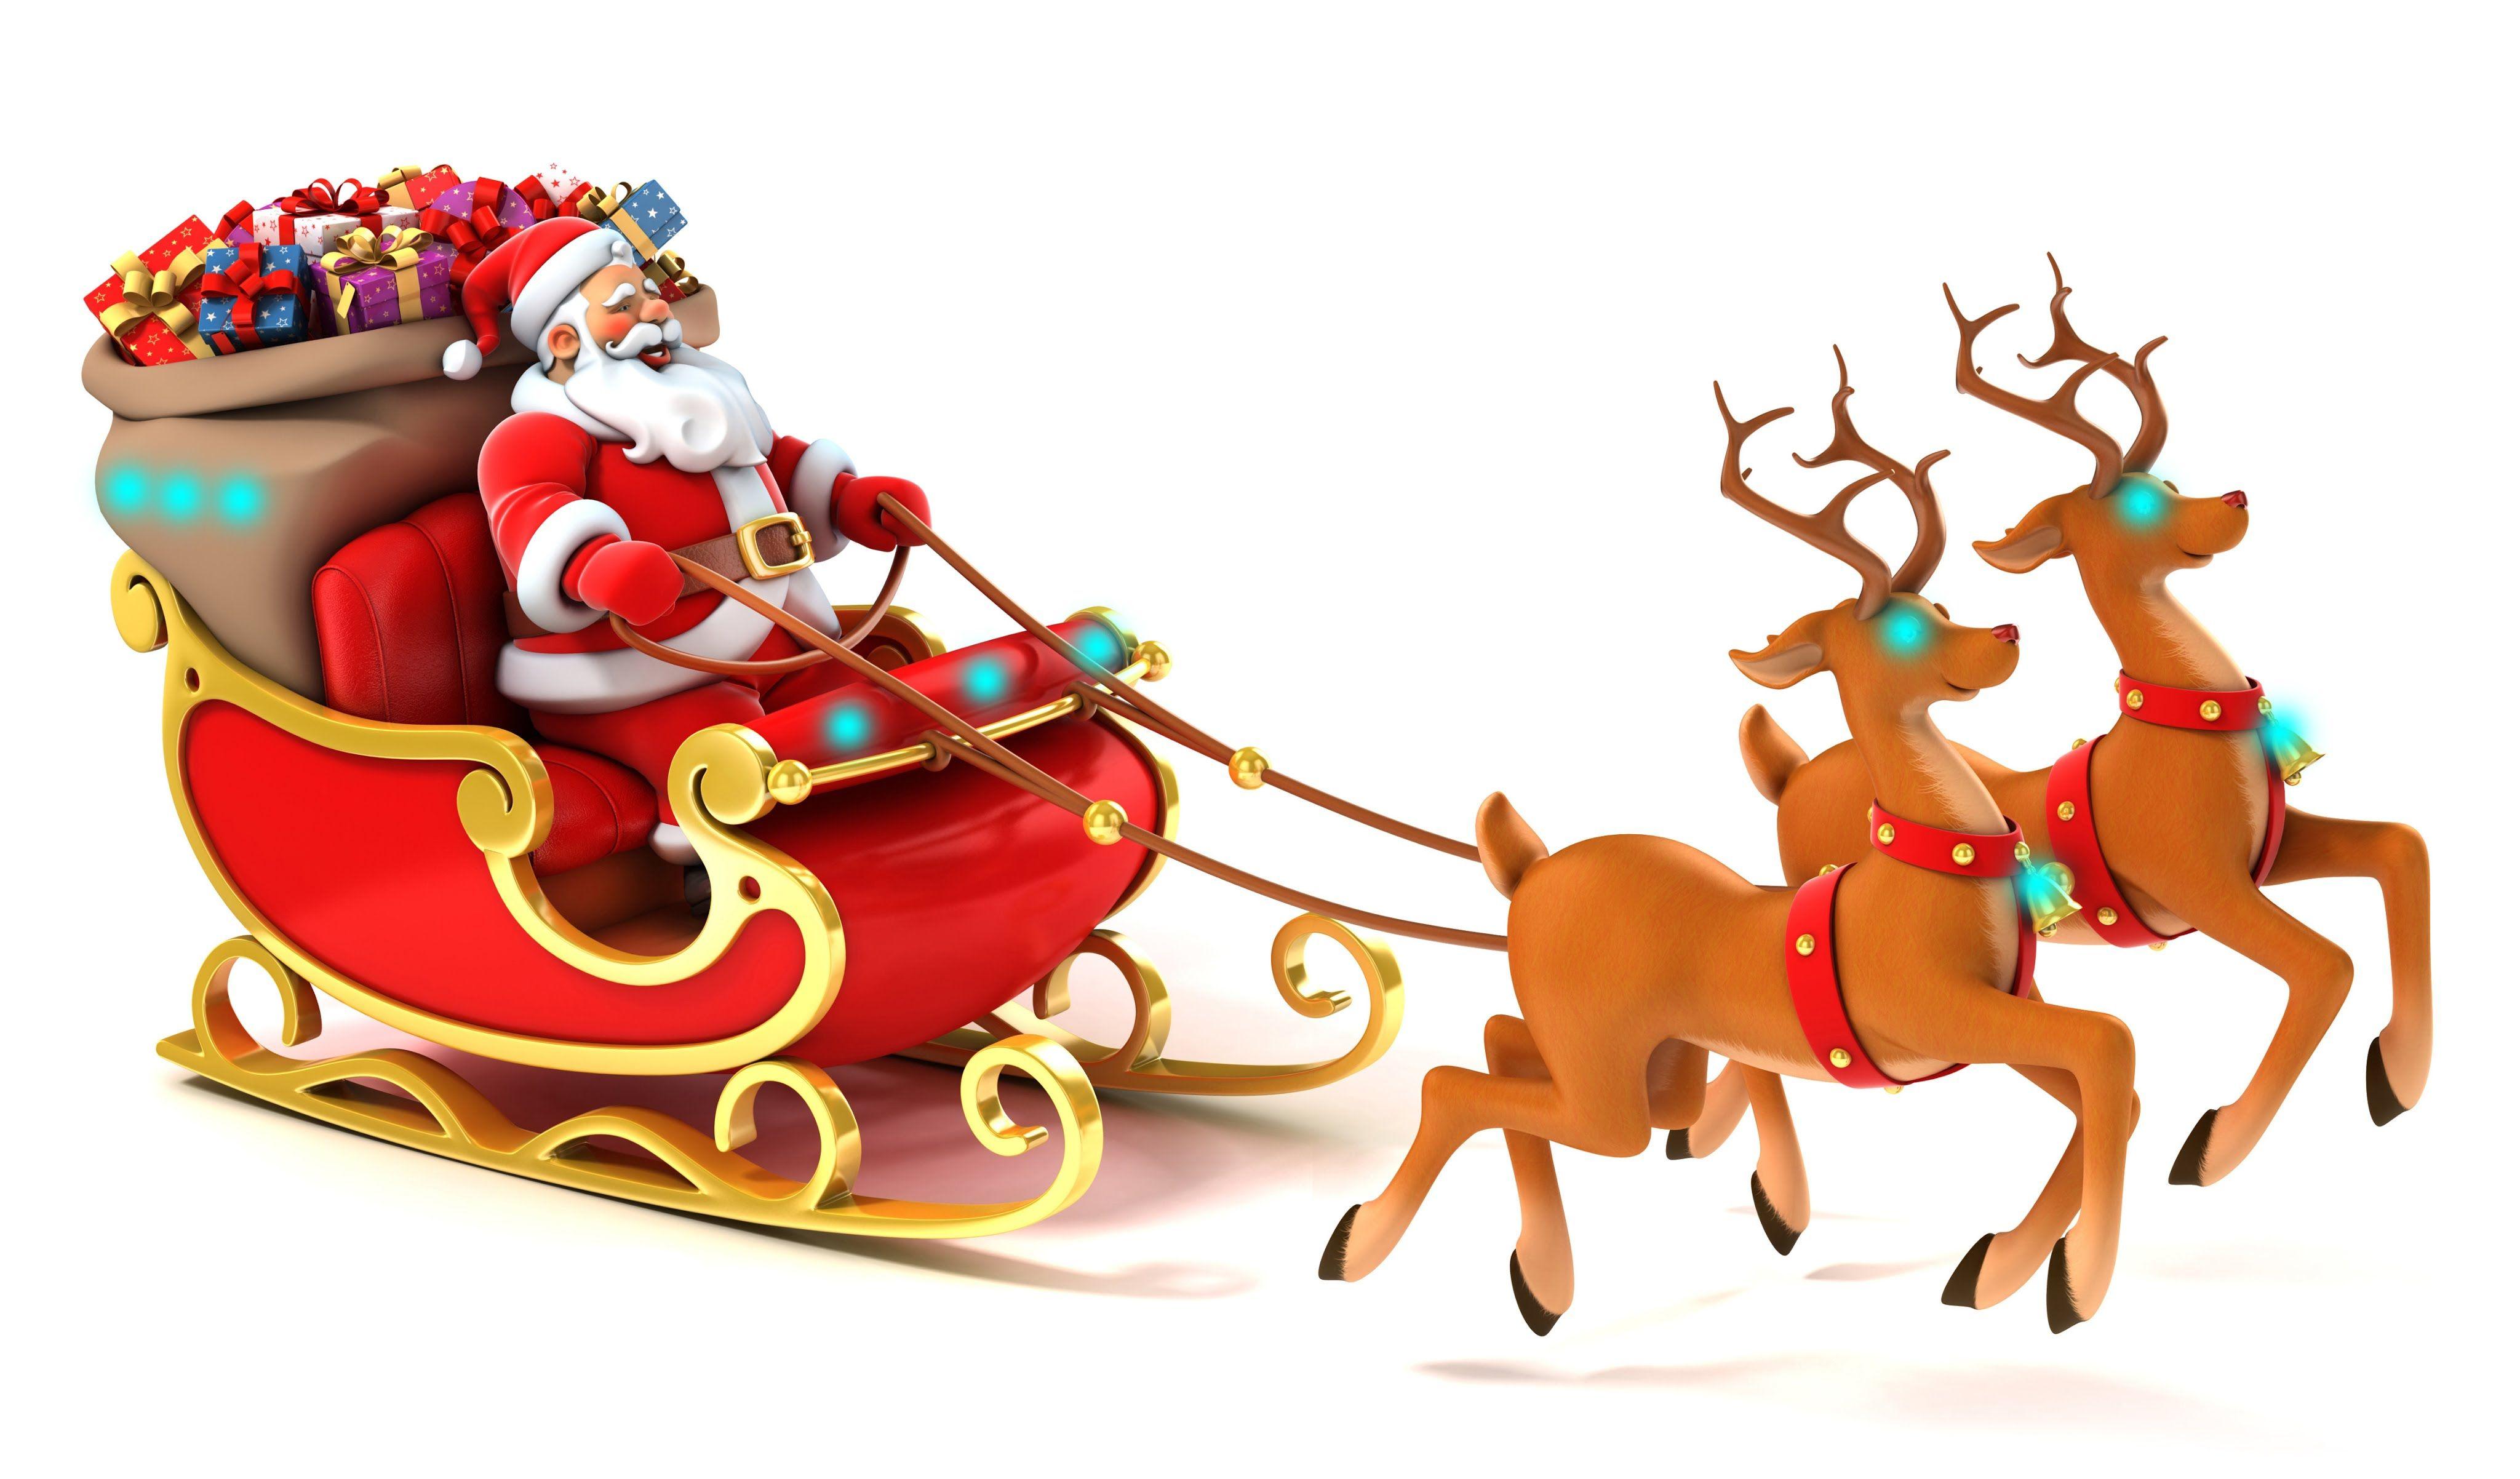 Santa Claus Image Free Download. Merry christmas santa